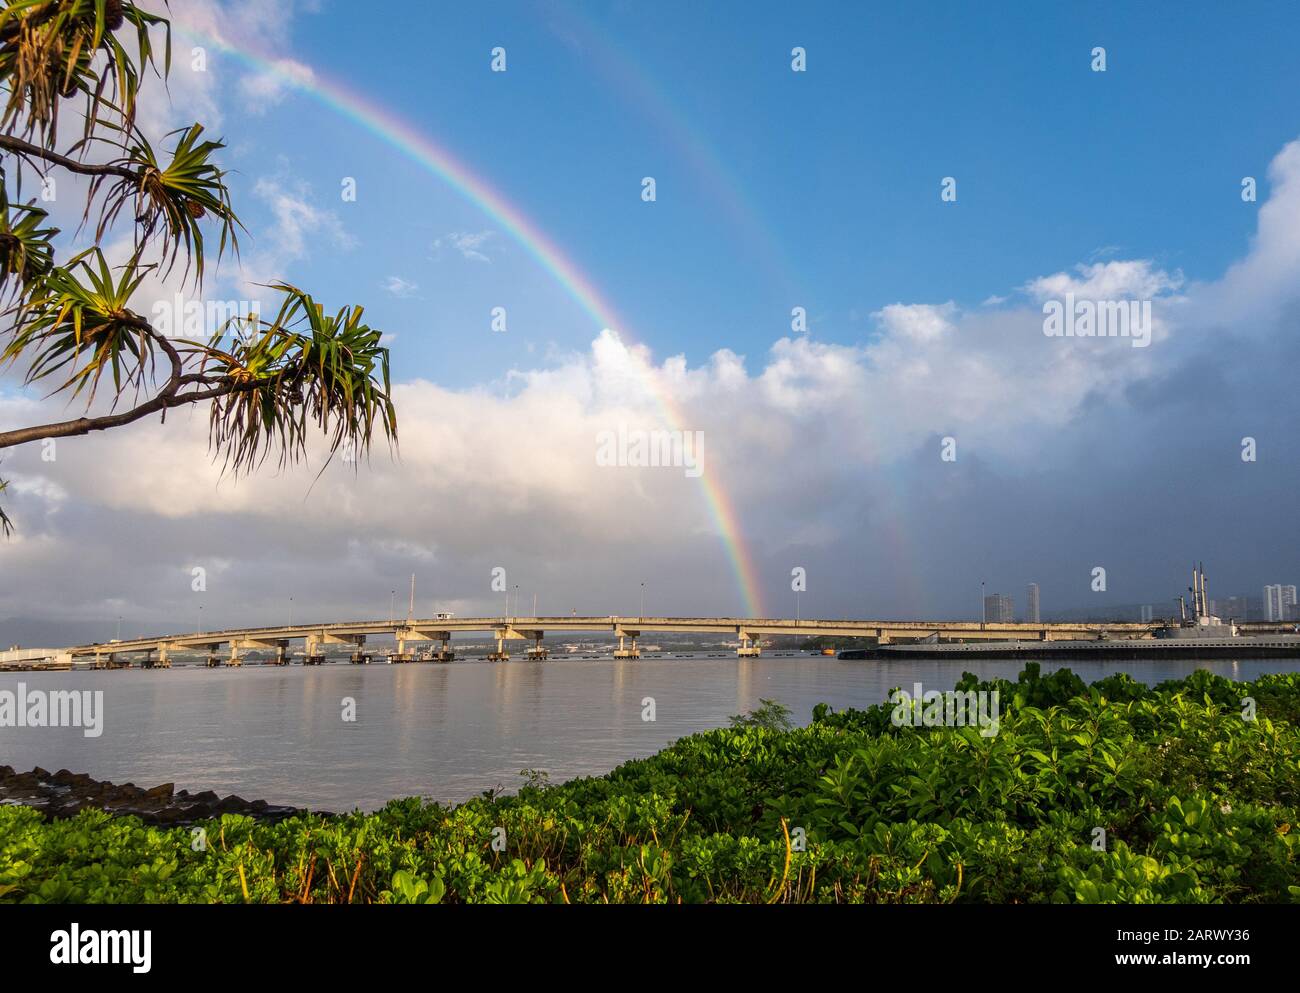 Oahu, Hawaii, USA. - 10. Januar 2020: Pearl Harbor. Ford Island Bridge toubhed by Double Regenbogen under Blue Sky with Heavy Rain Clouds. Grünes Laub Stockfoto